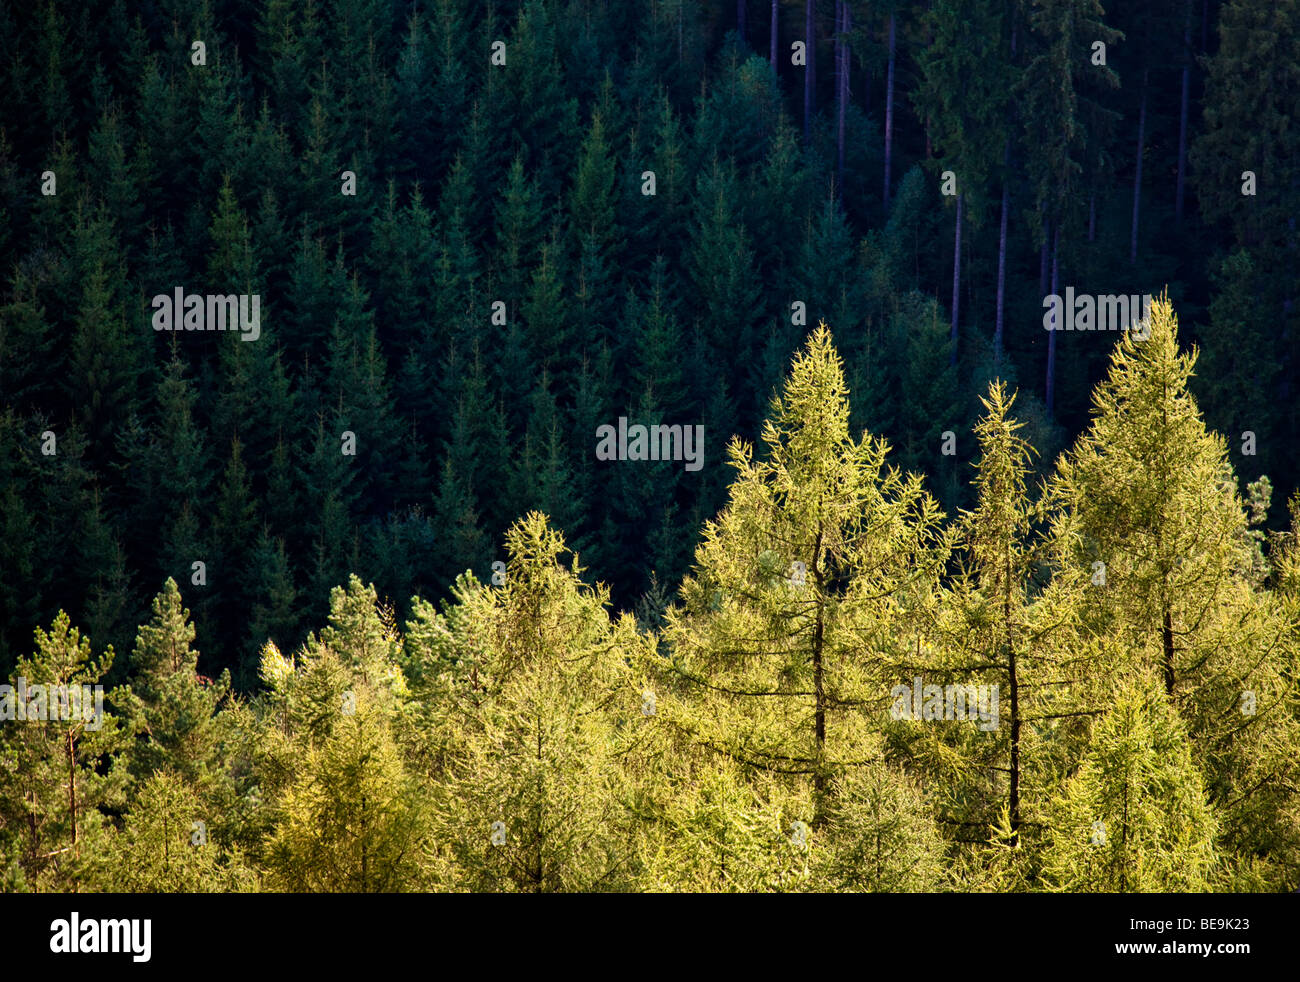 Forest of larch trees in National Park Sächsische Schweiz in Saxony, Germany Stock Photo